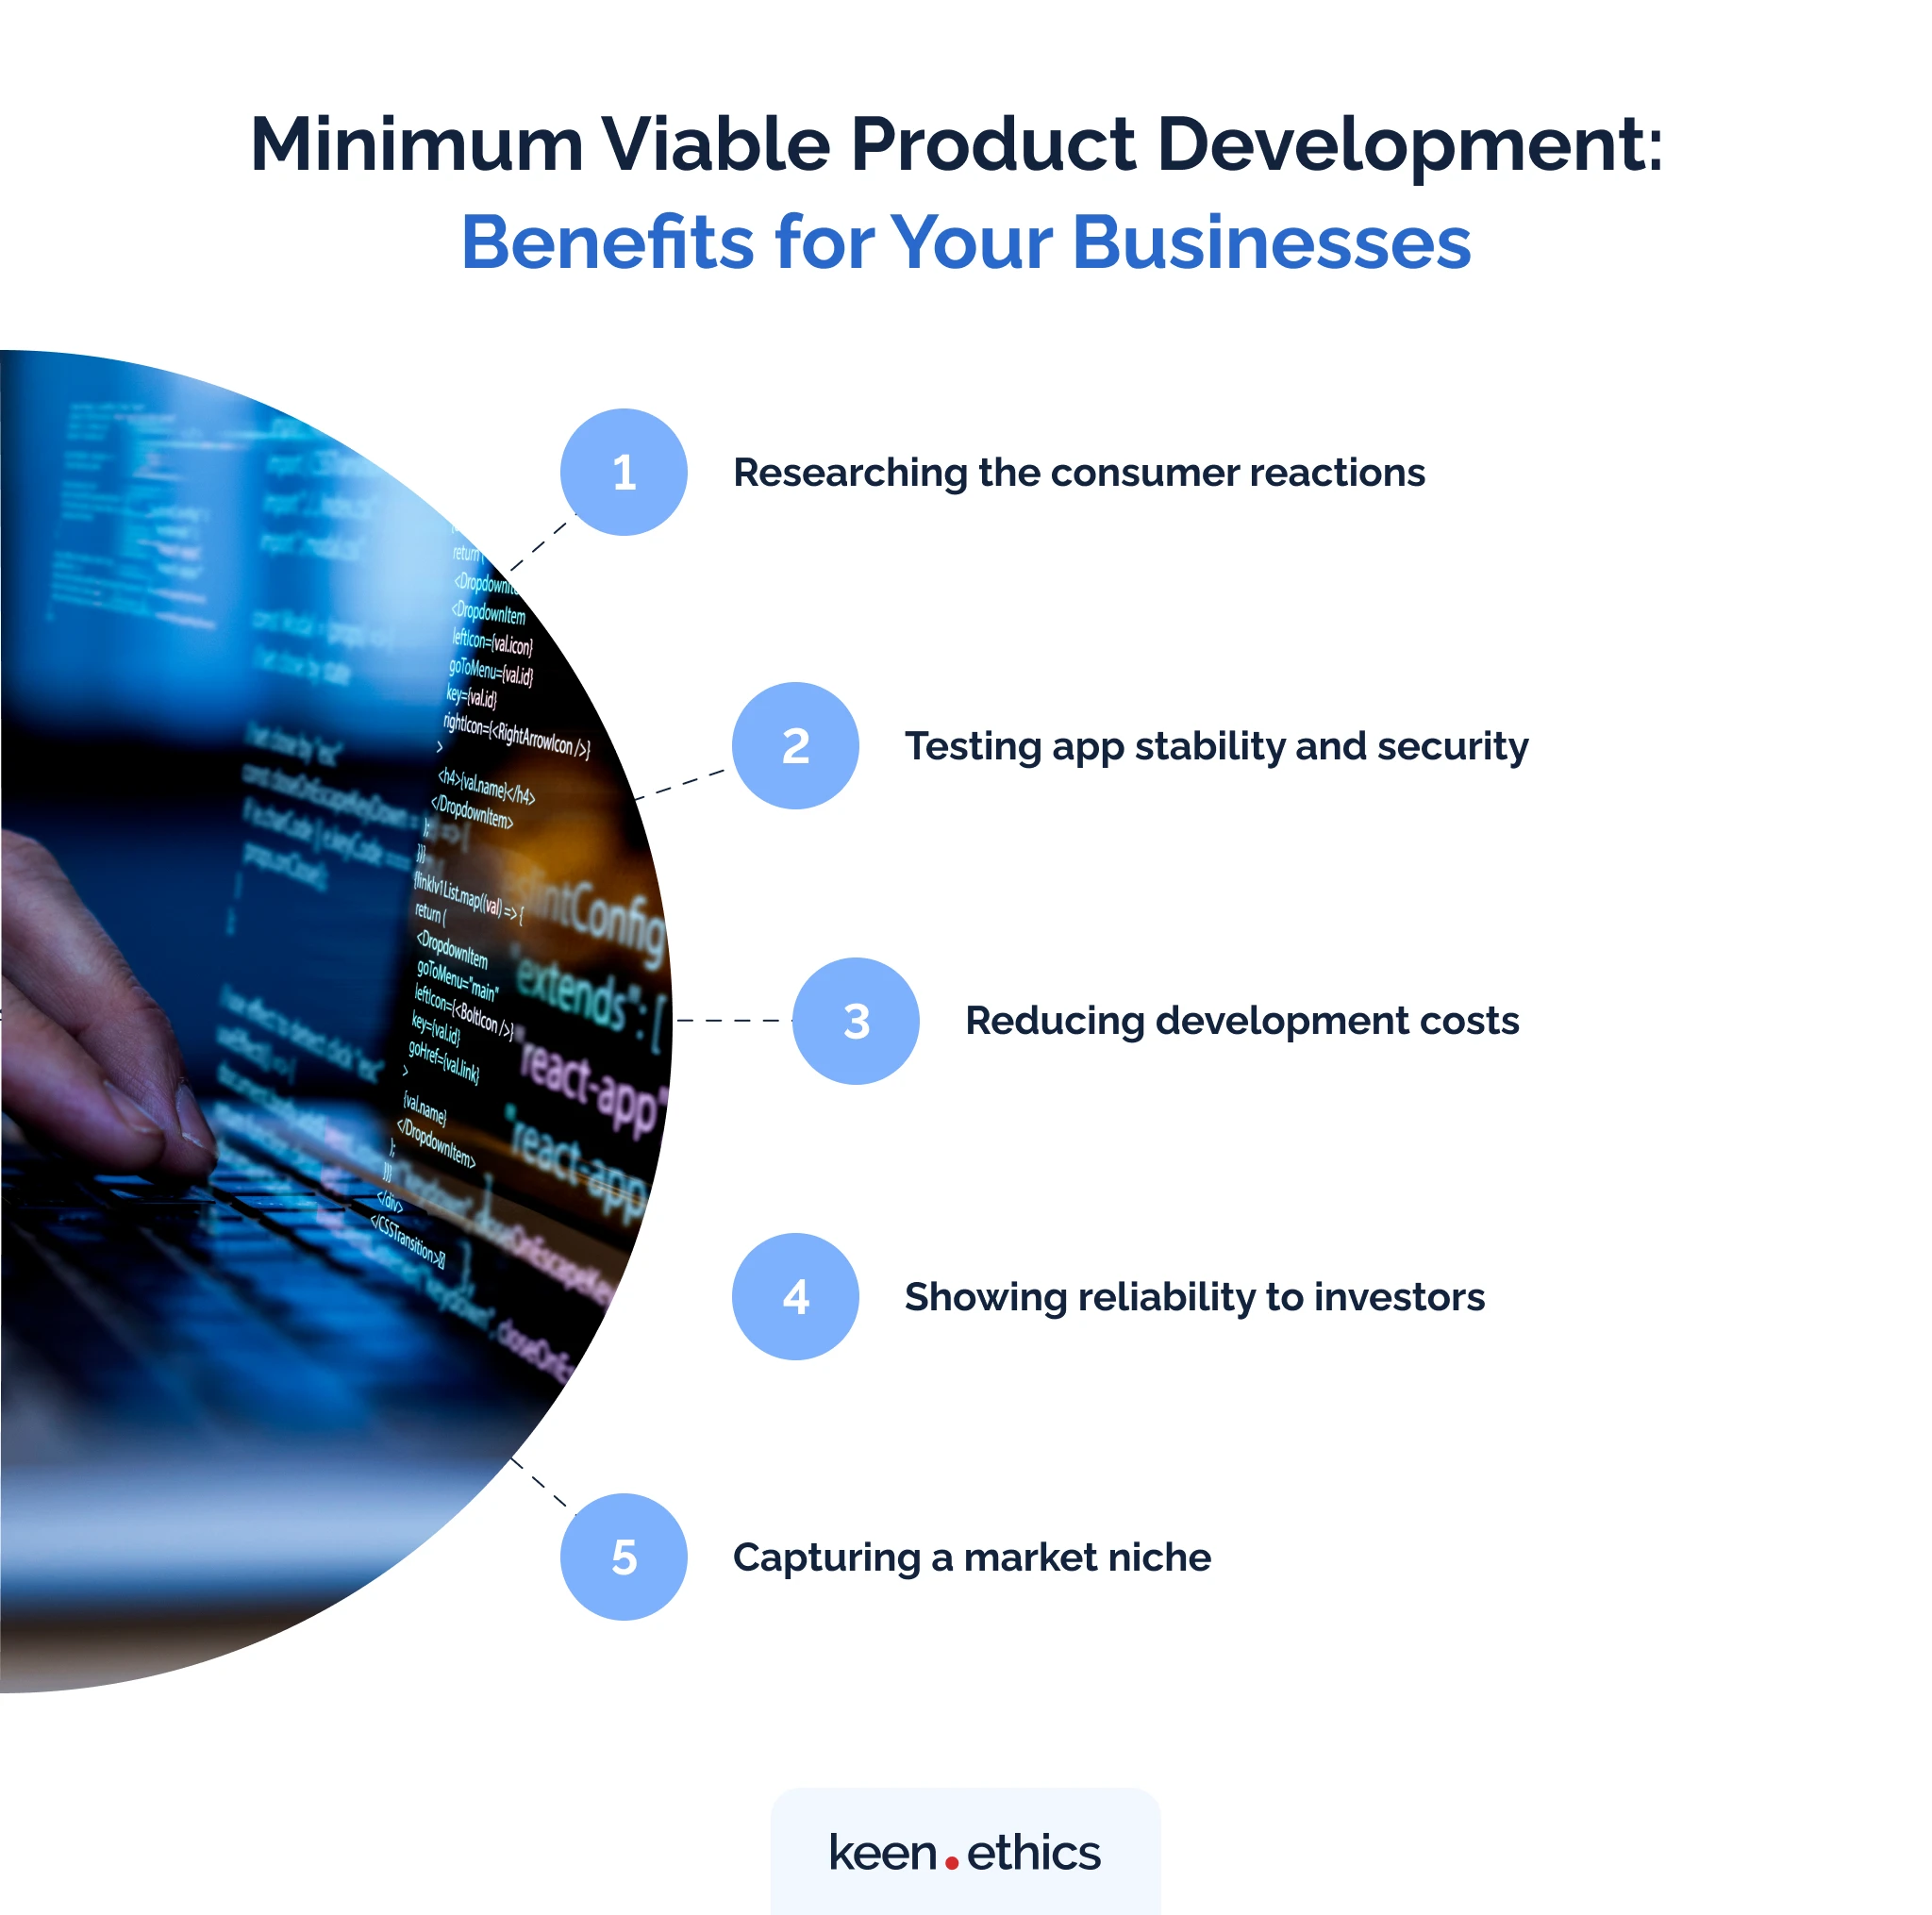 Minimum viable product development: Benefits for your business